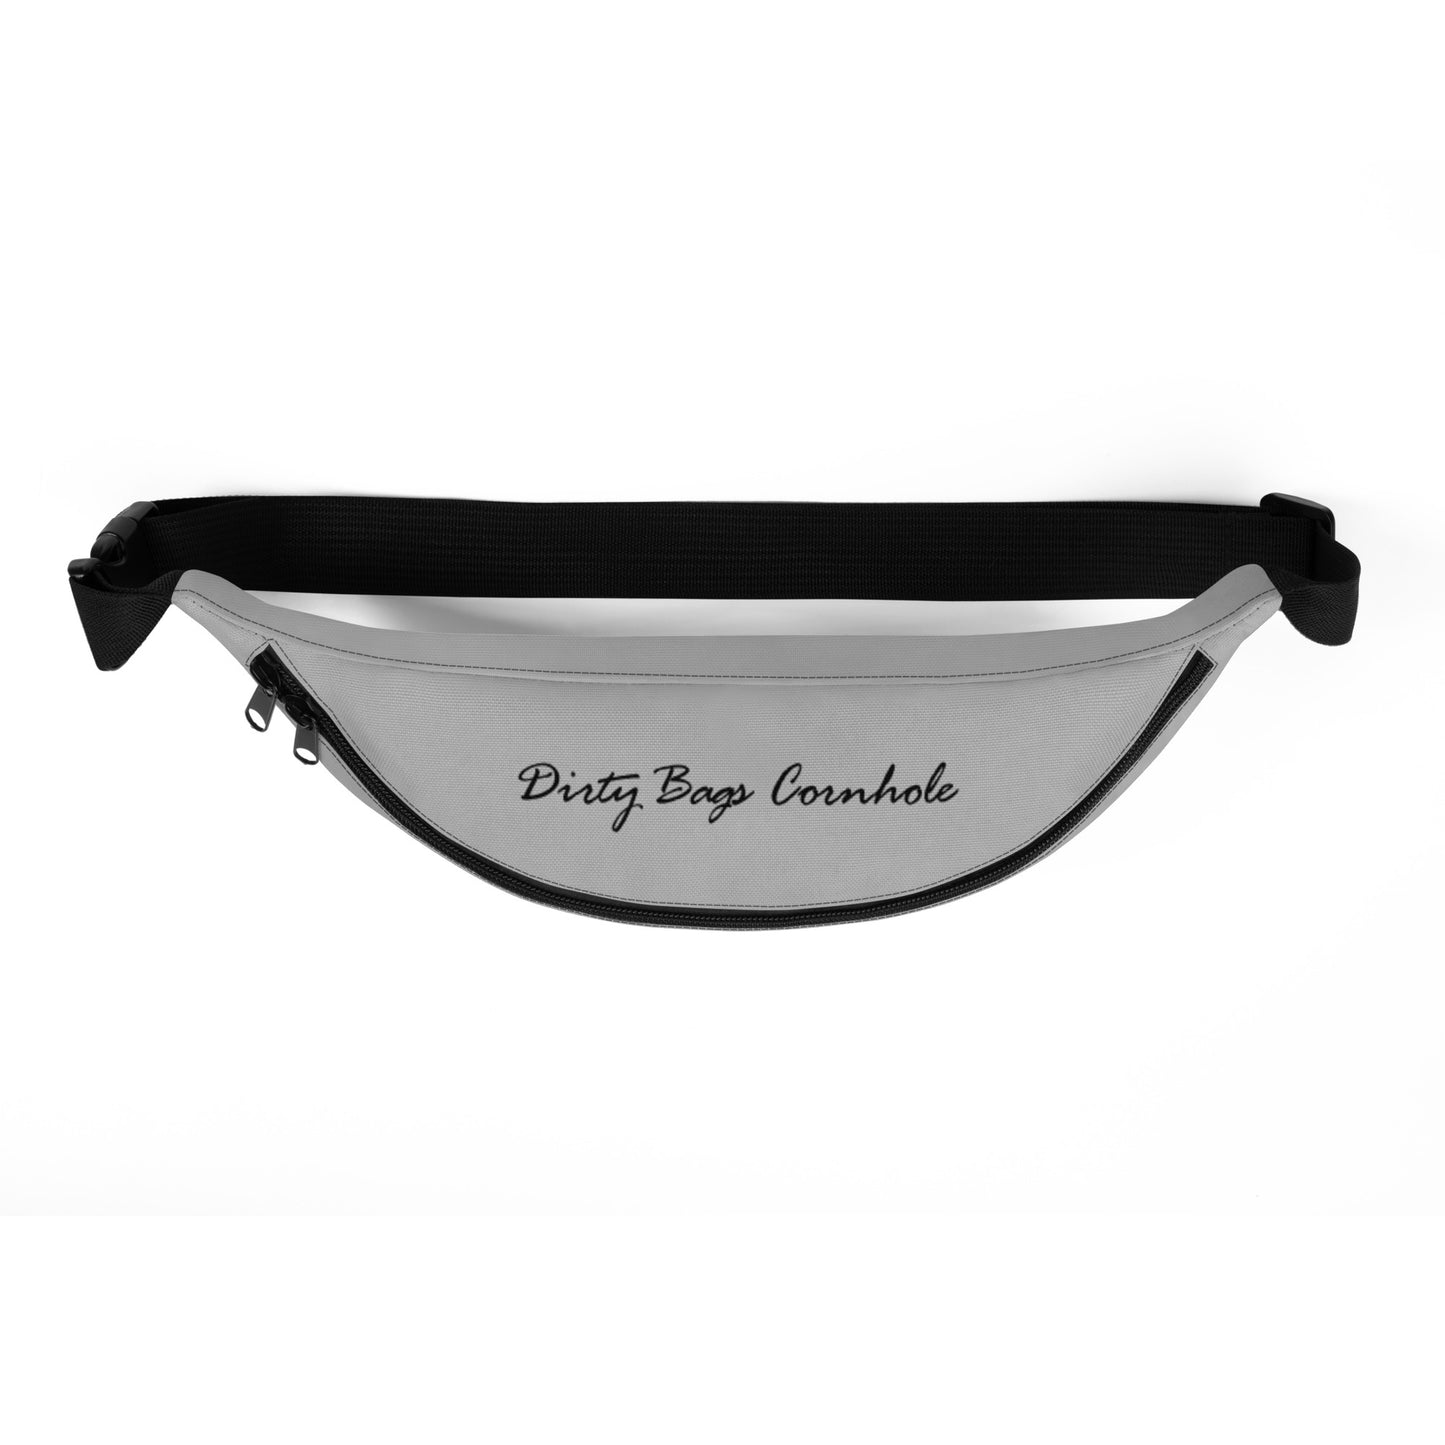 Dirty Bags Cornhole Fanny Pack - Gray